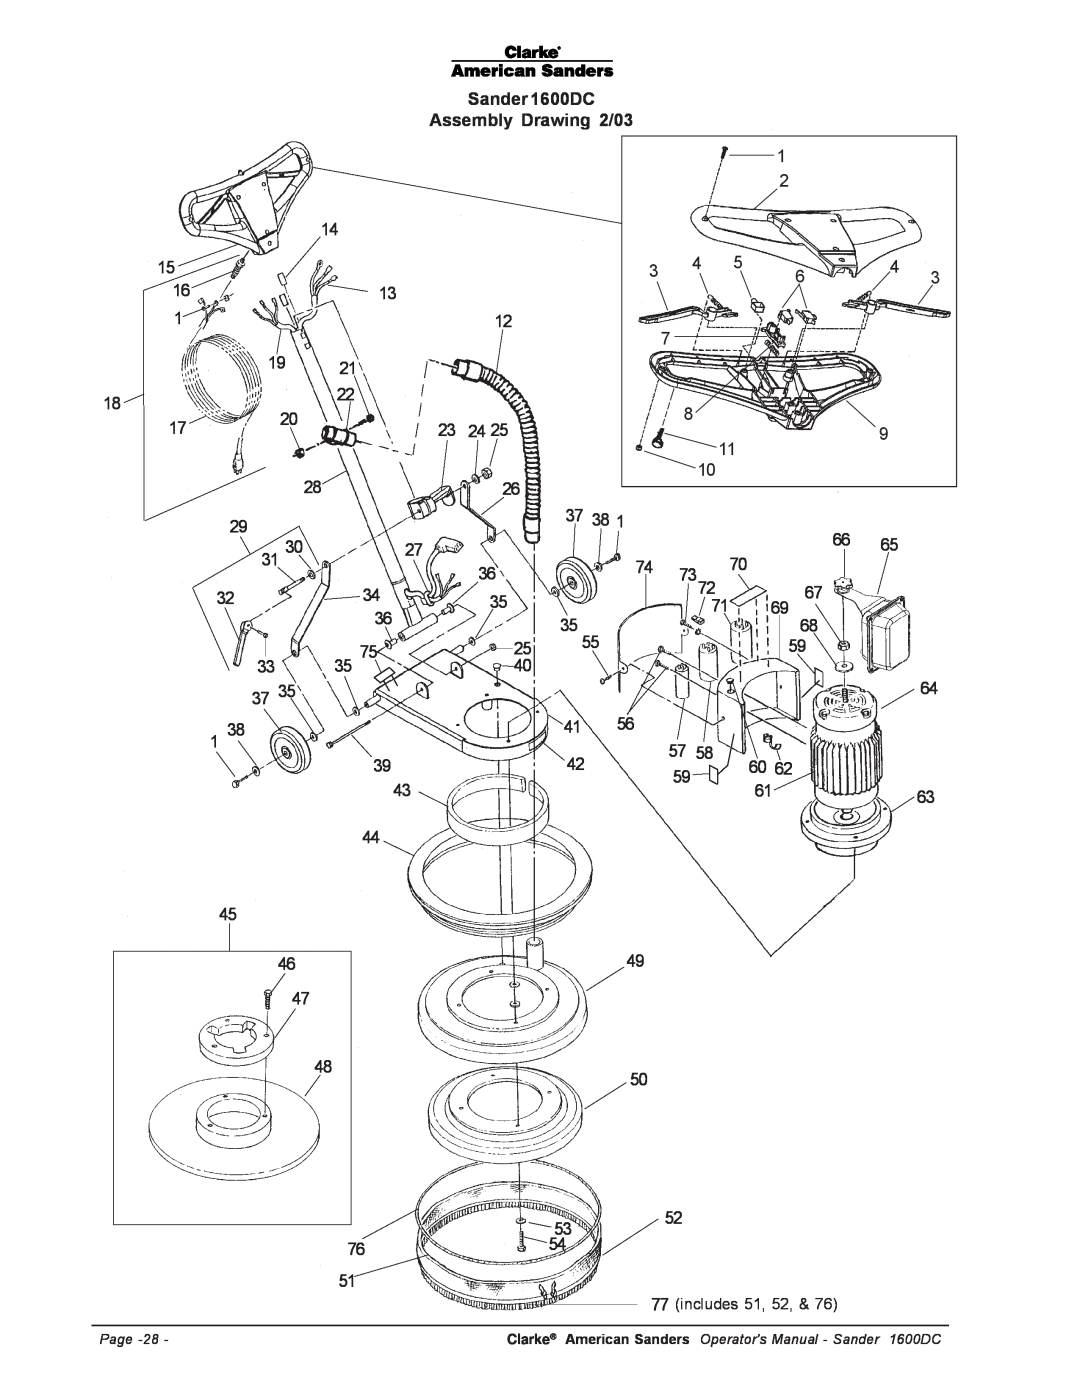 Nilfisk-ALTO C.A.V. 15 manual Sander 1600DC Assembly Drawing 2/03, includes 